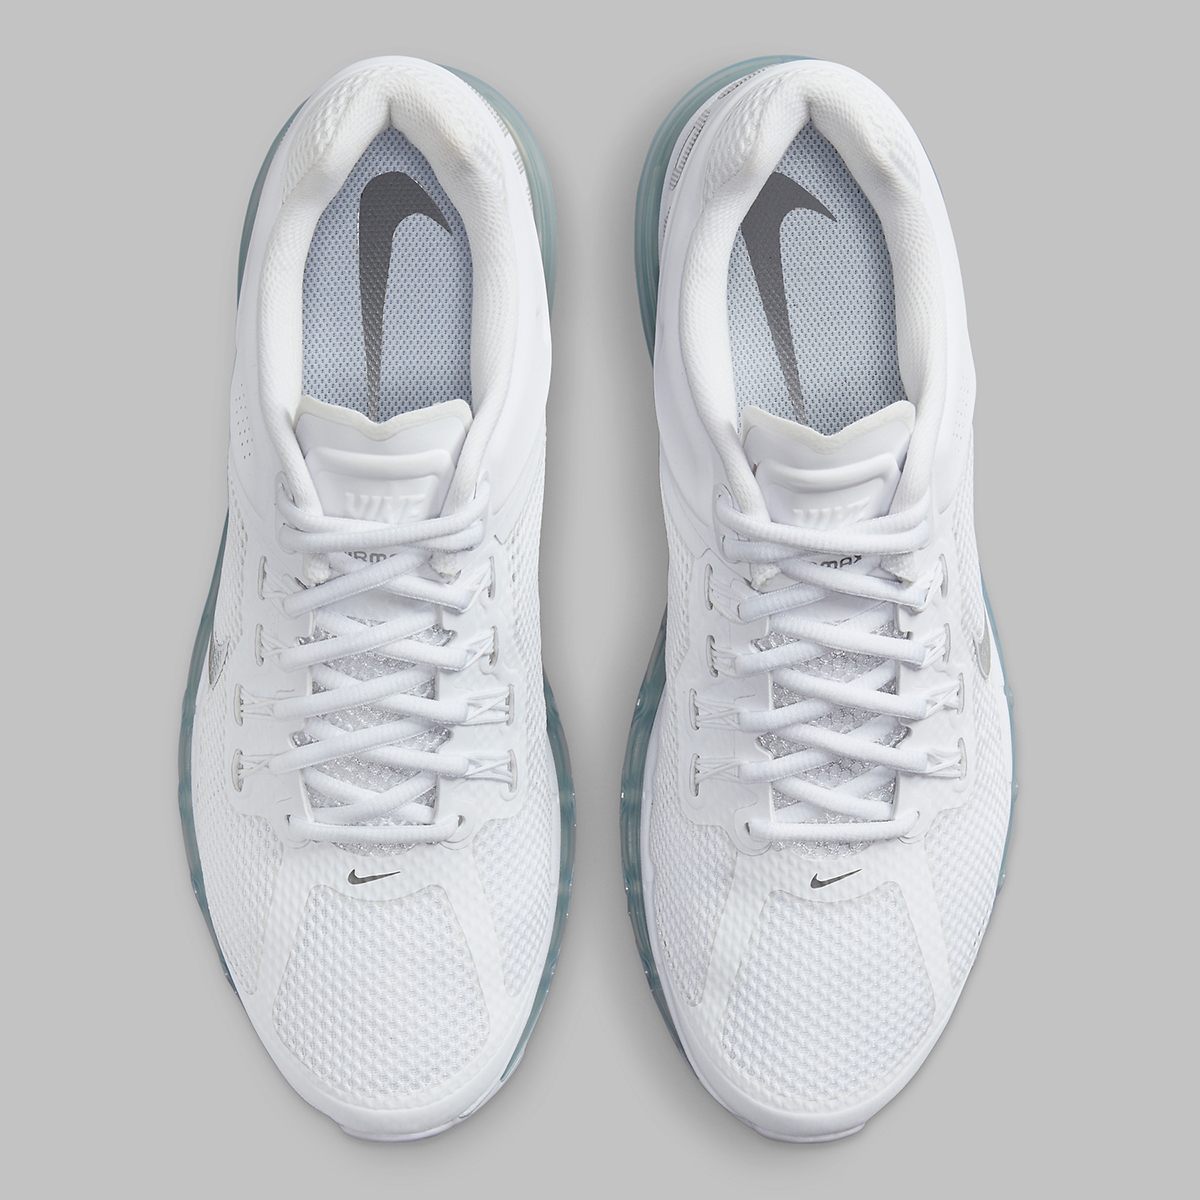 Nike Air Max 2013 White Metallic Silver Hf4884 100 1